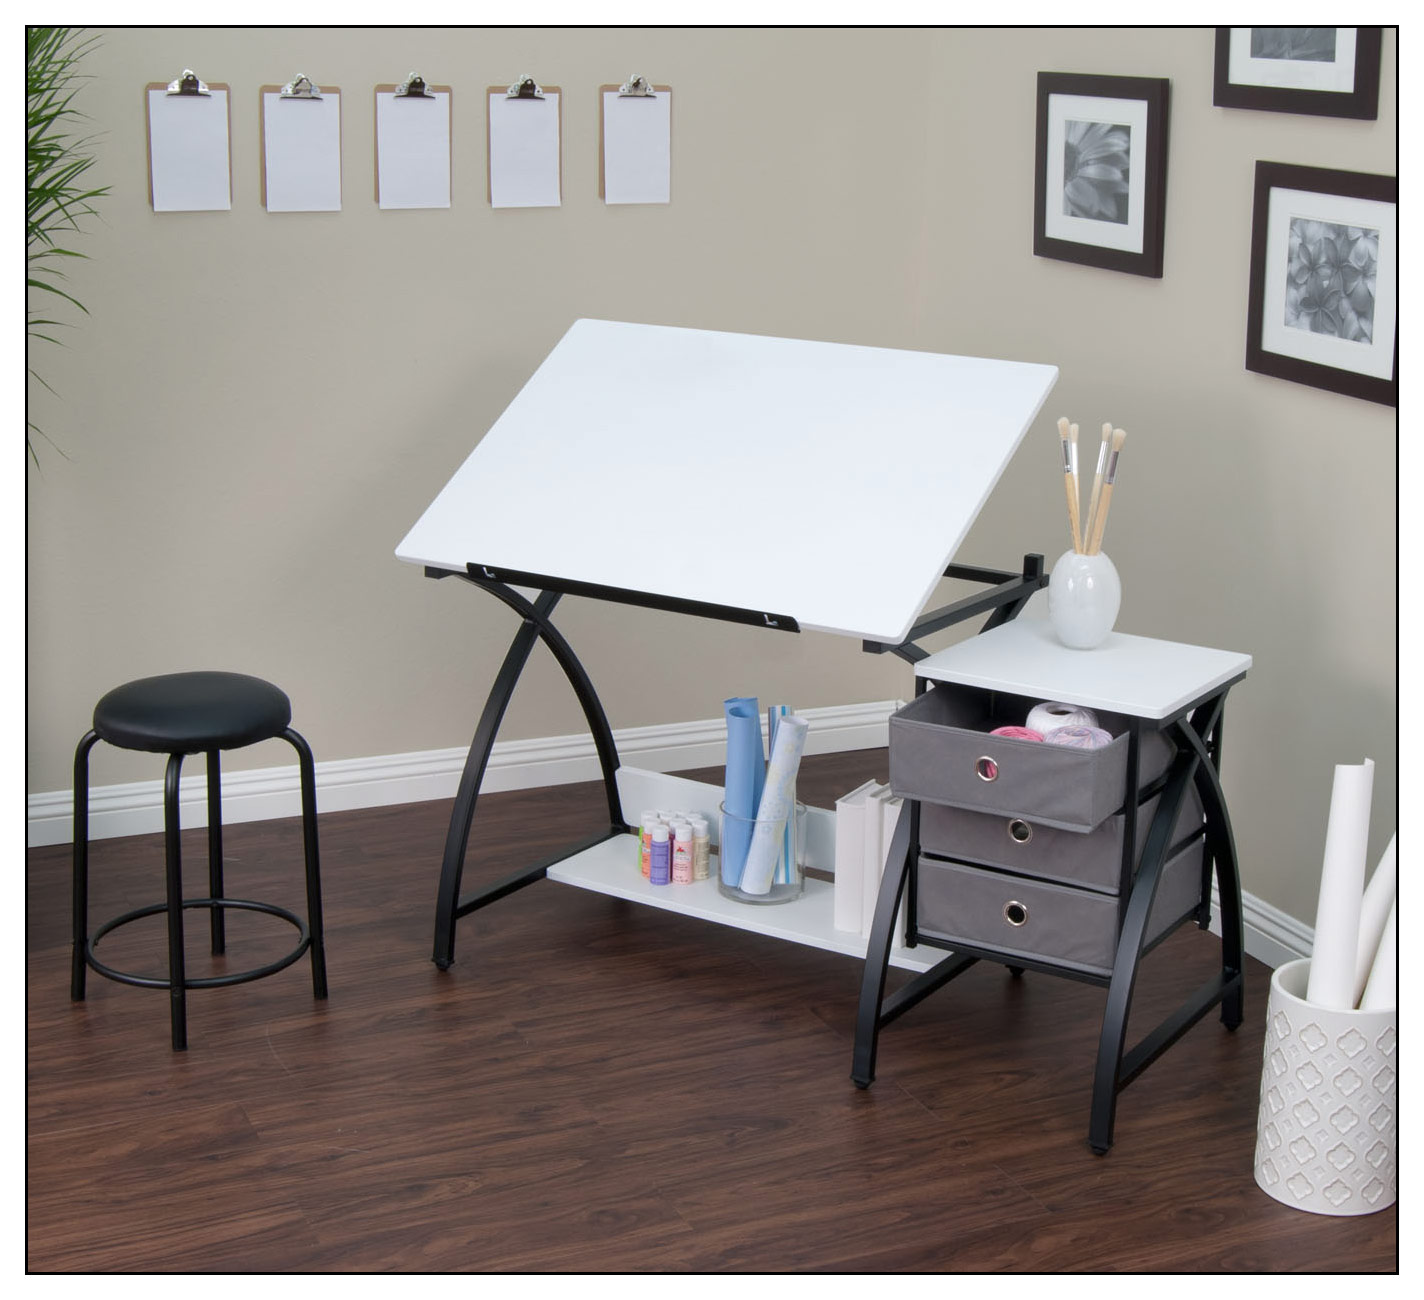 Studio Designs - Comet Center Craft Desk - Black/White was $161.99 now $128.99 (20.0% off)